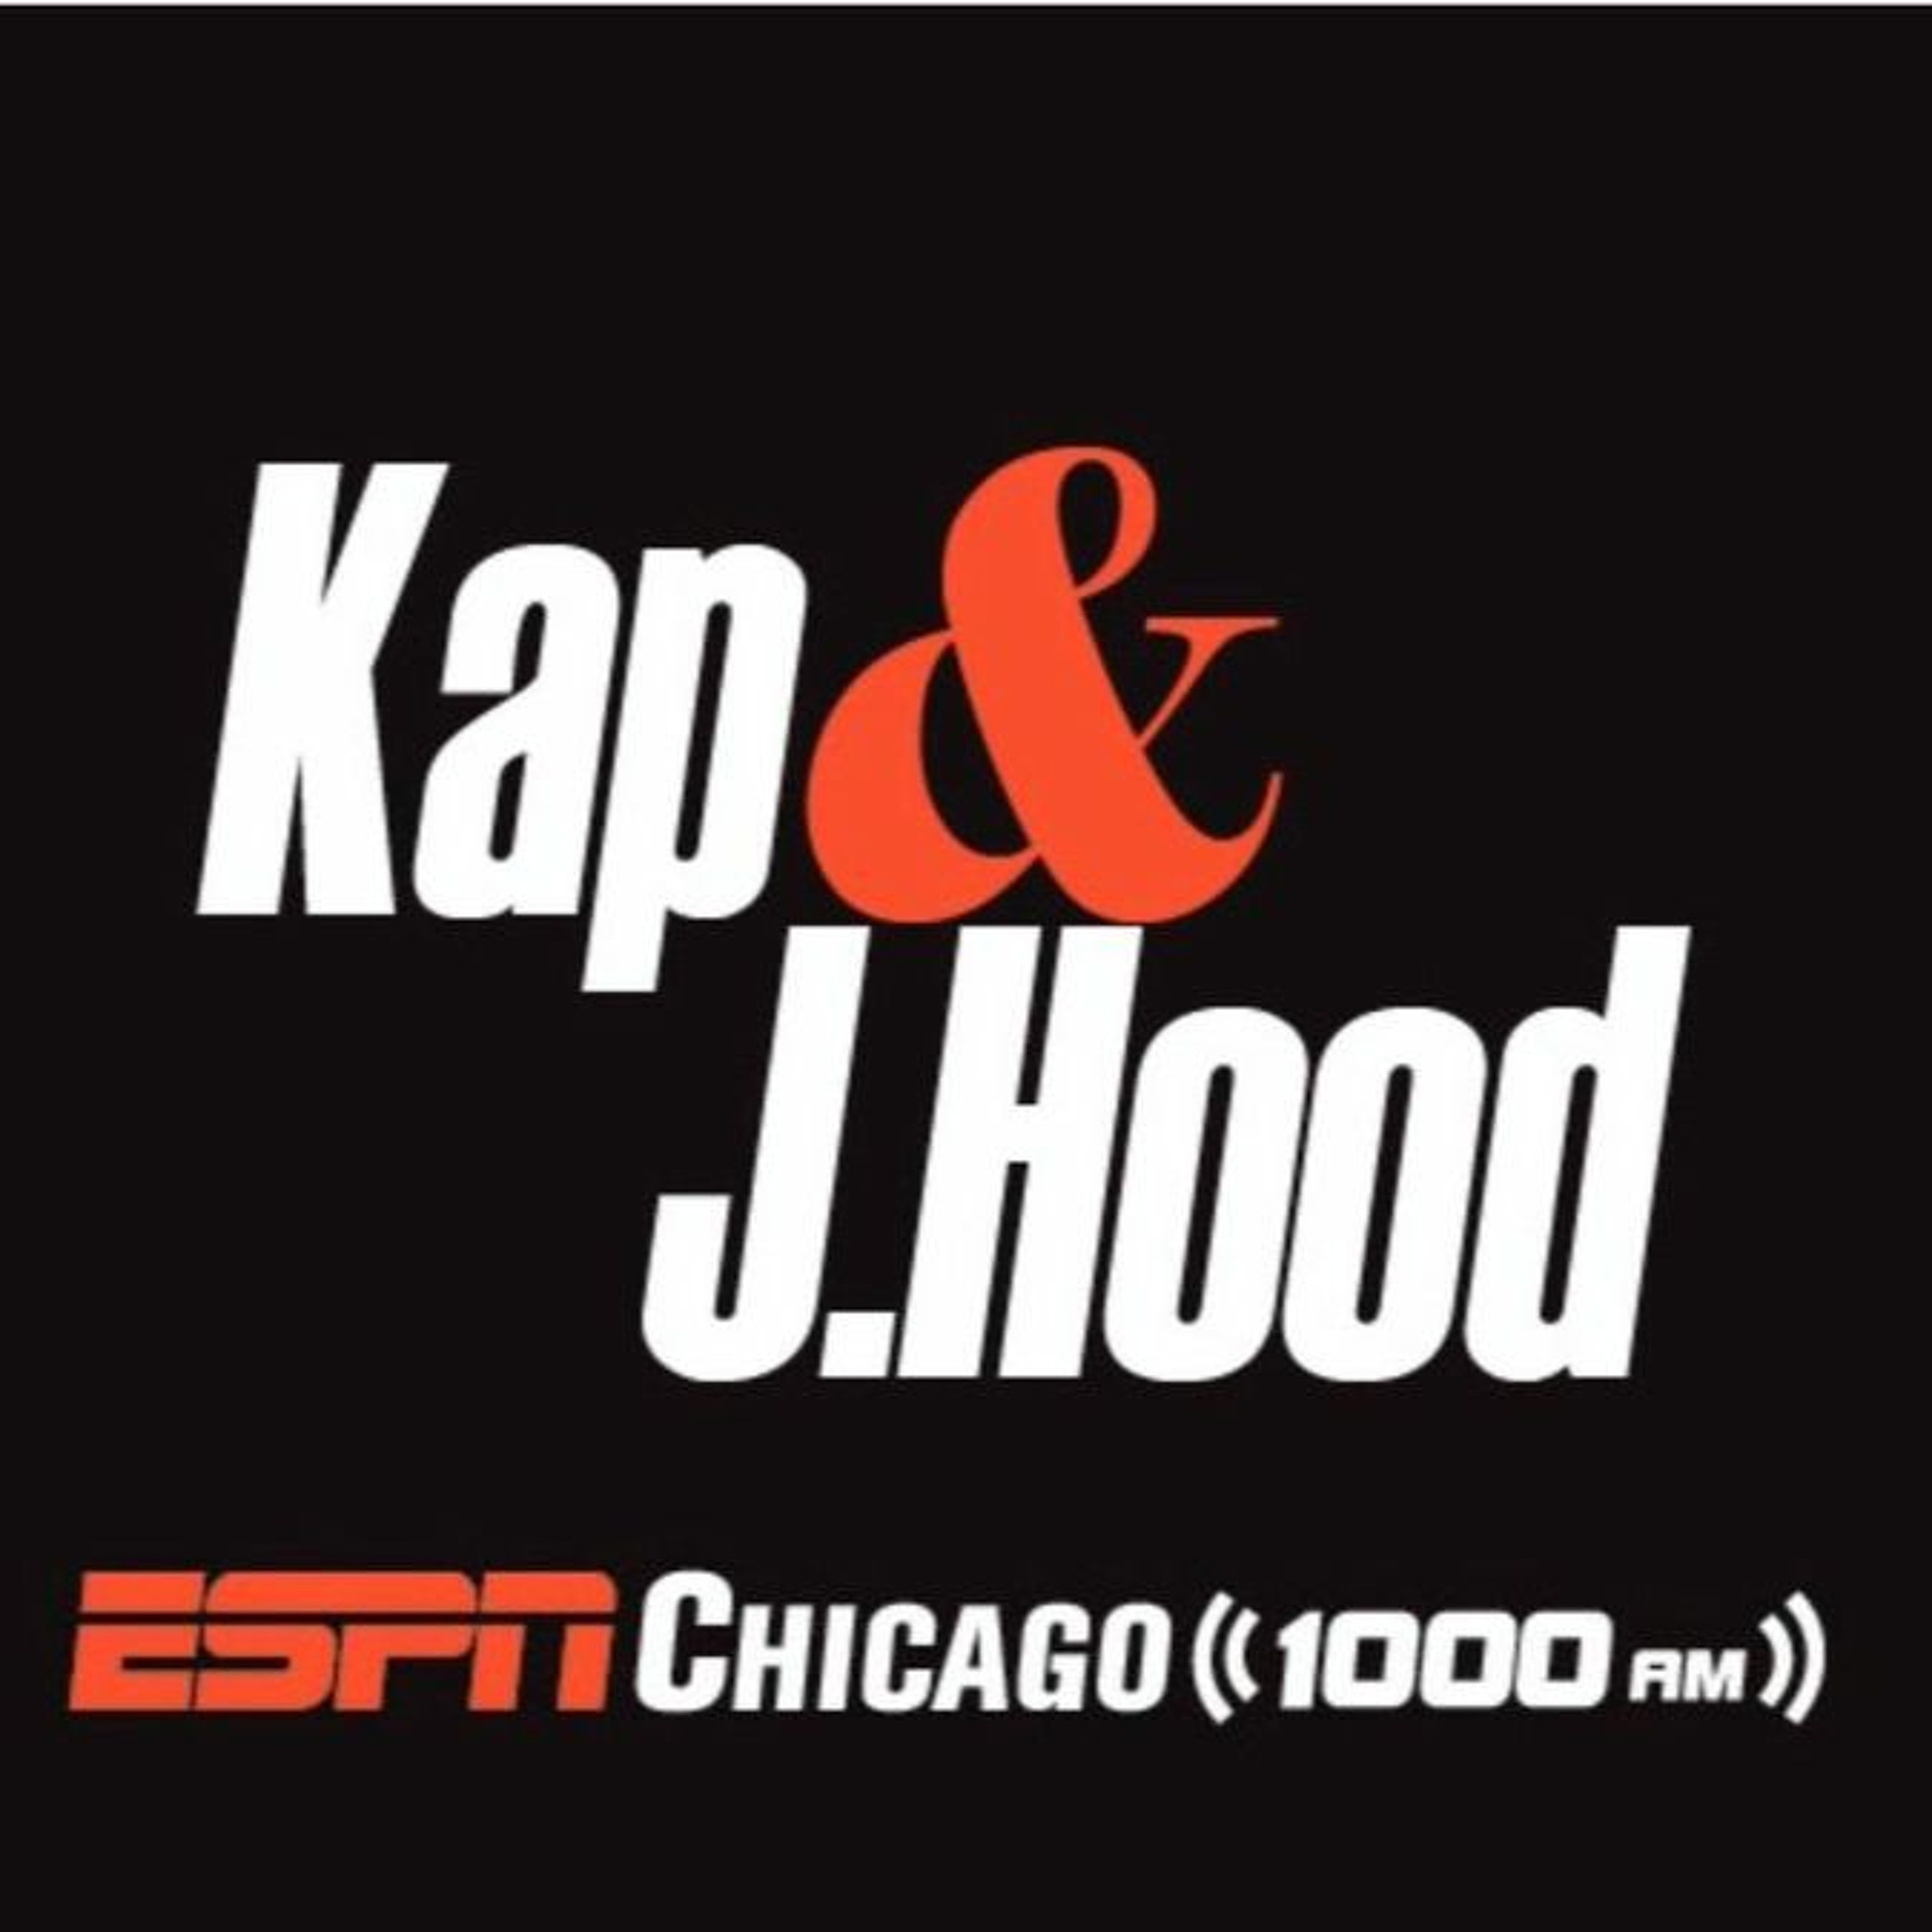 7/2 Kap & J.Hood Shorts